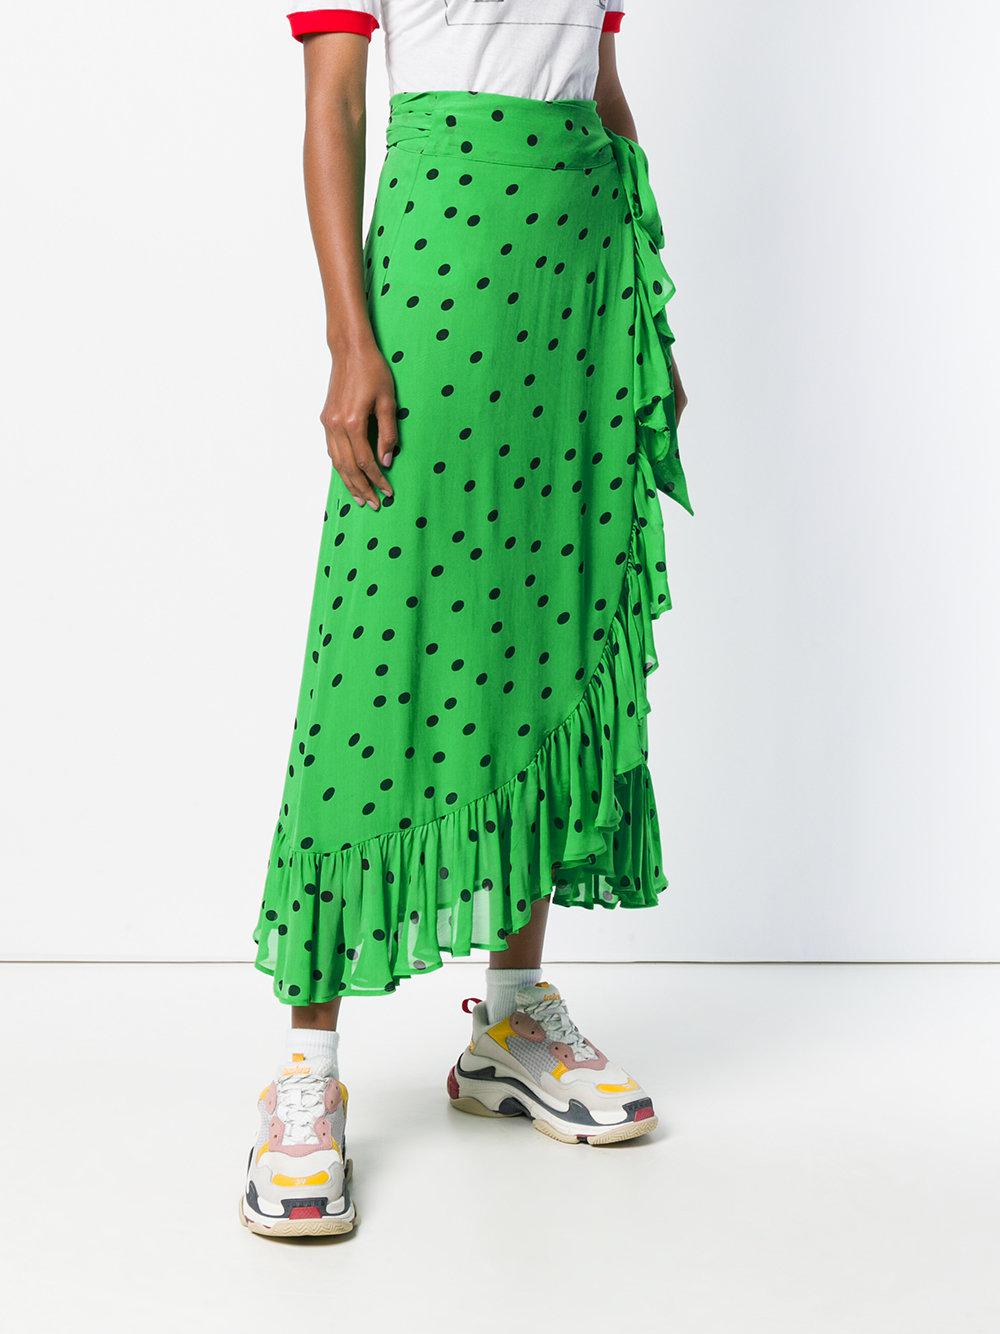 Ganni Polka Dot Ruffled Wrap Skirt in Green - Lyst